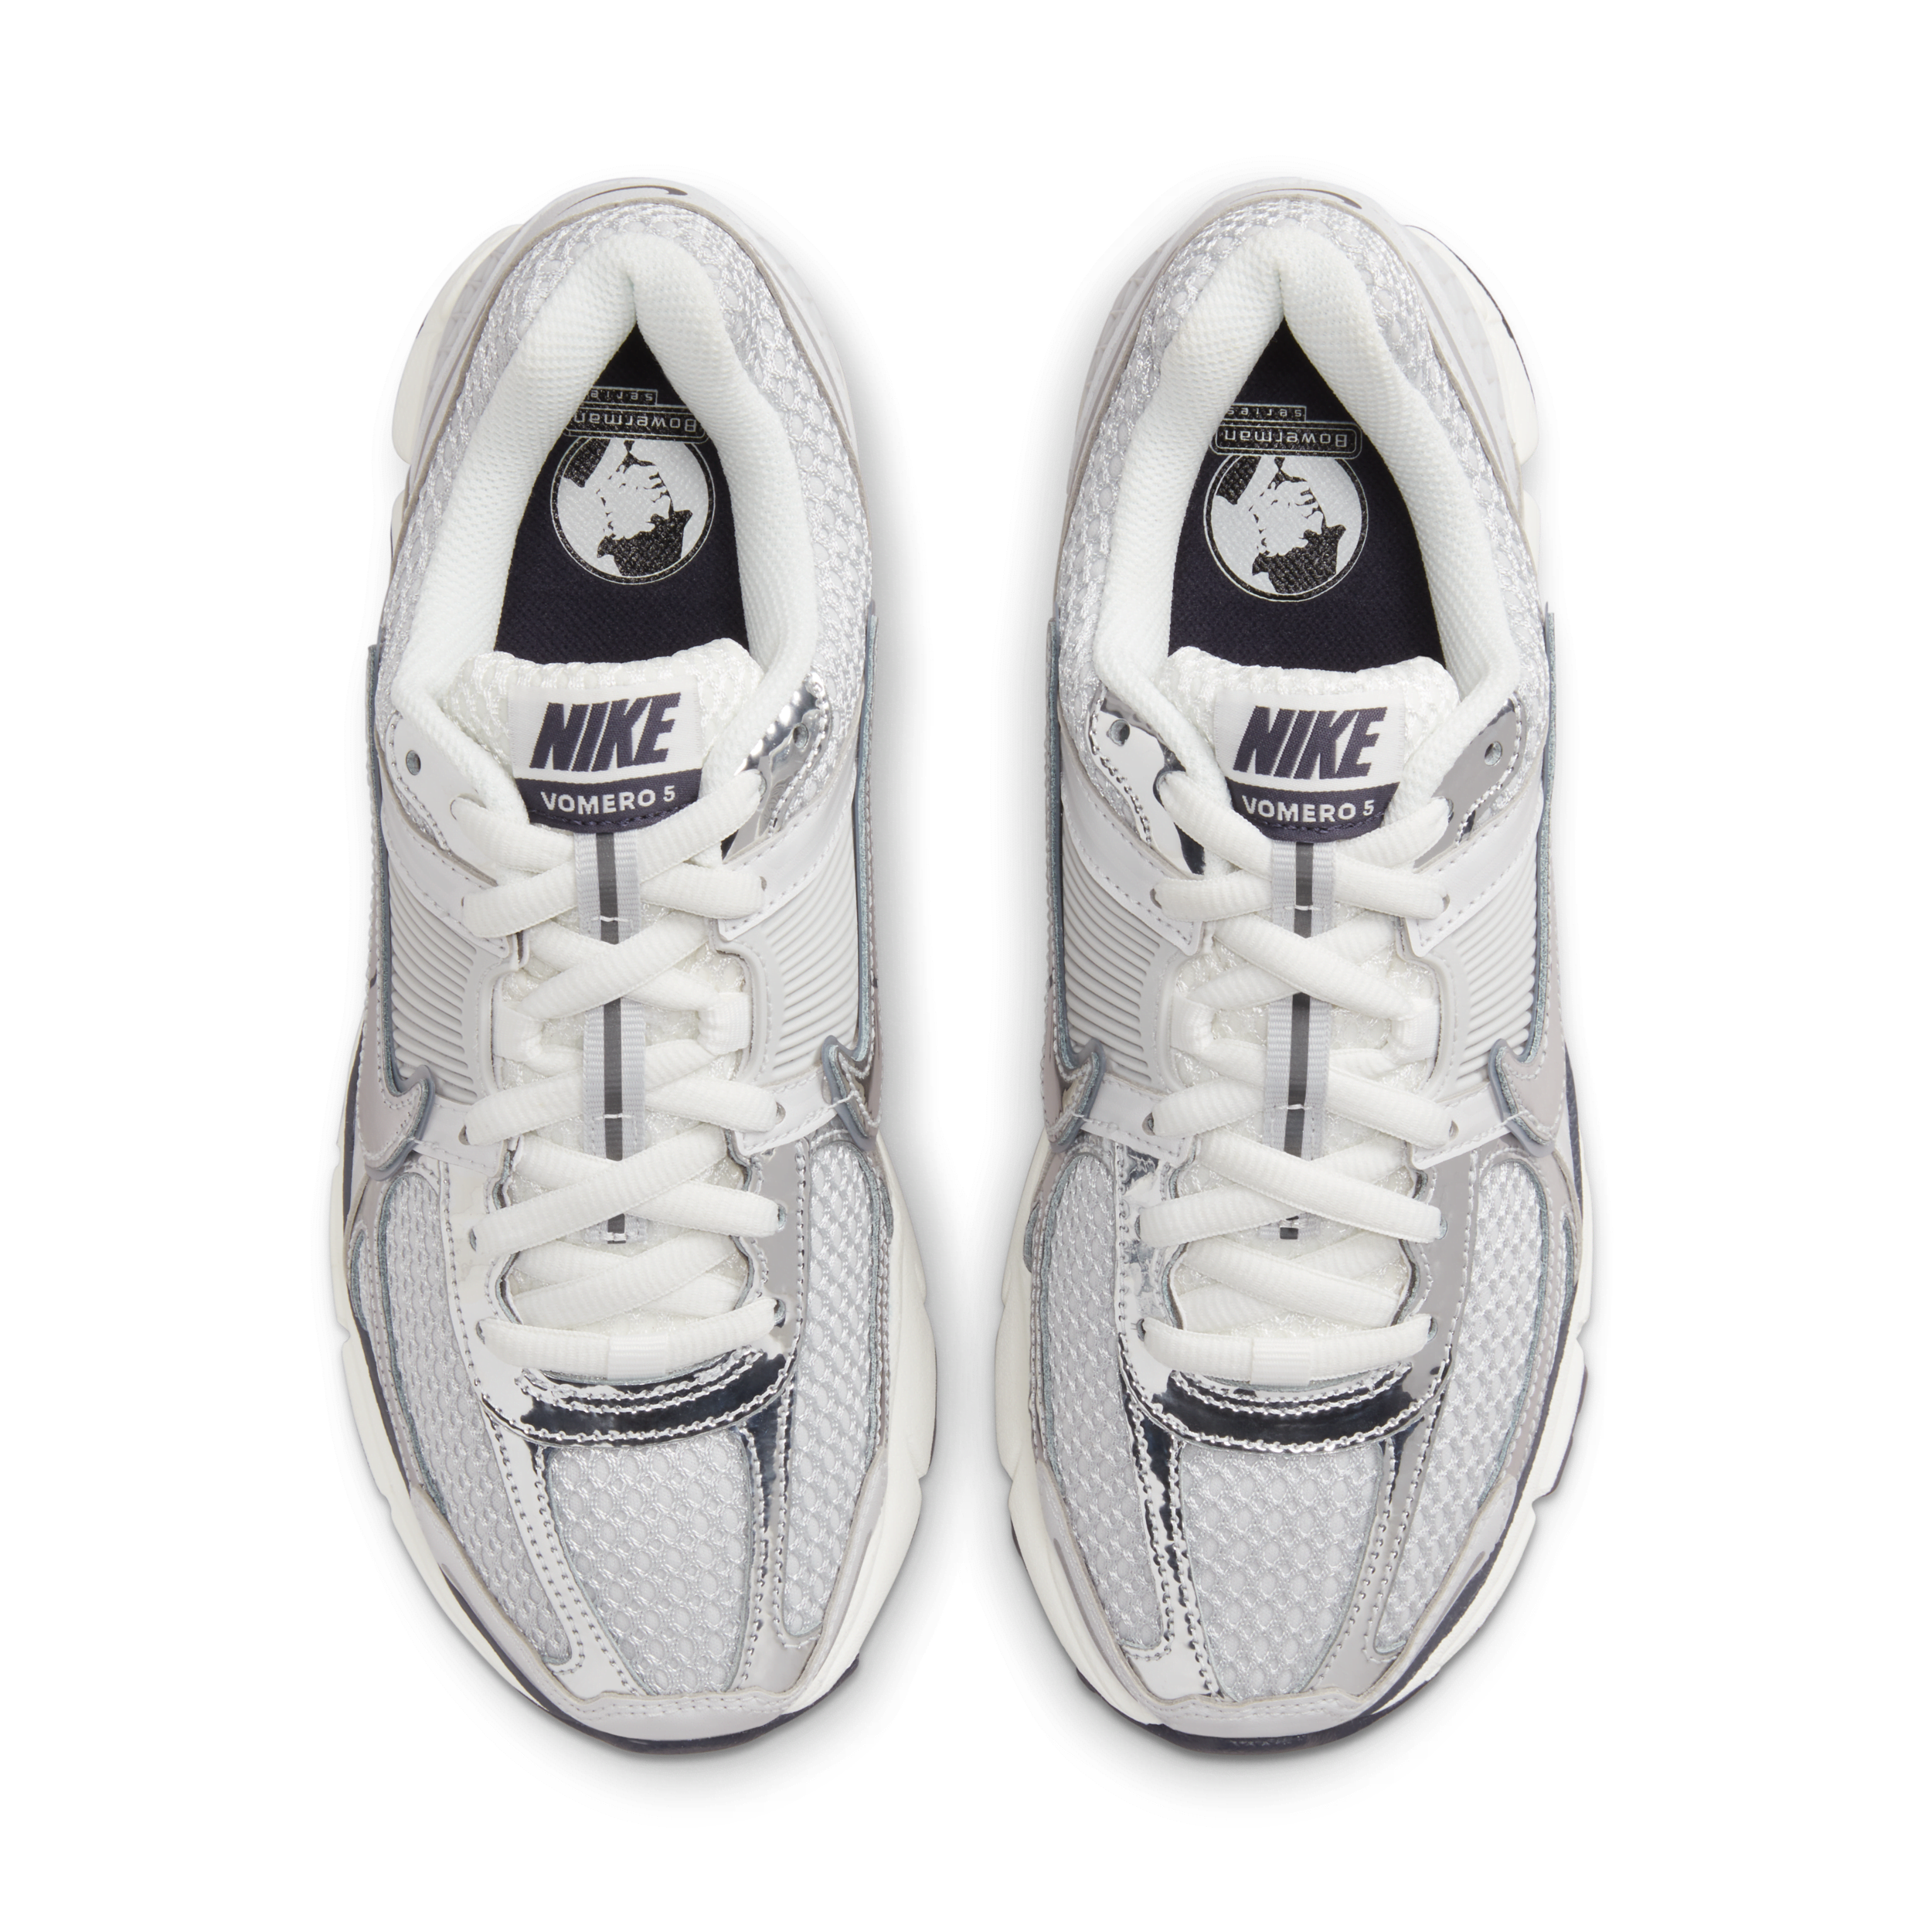 Nike Zoom Vomero 5 Damenschuh - Grau